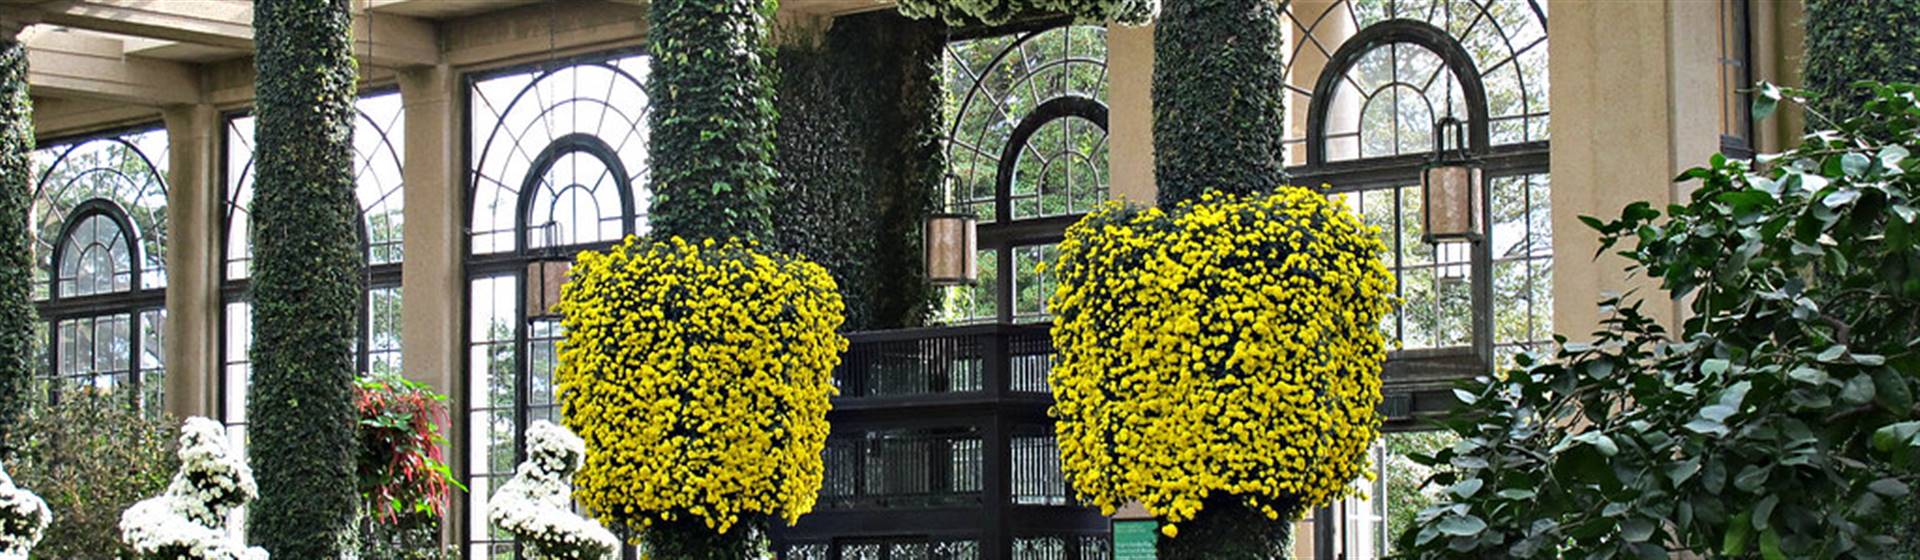 Longwood Gardens: Chrysanthemum Festival